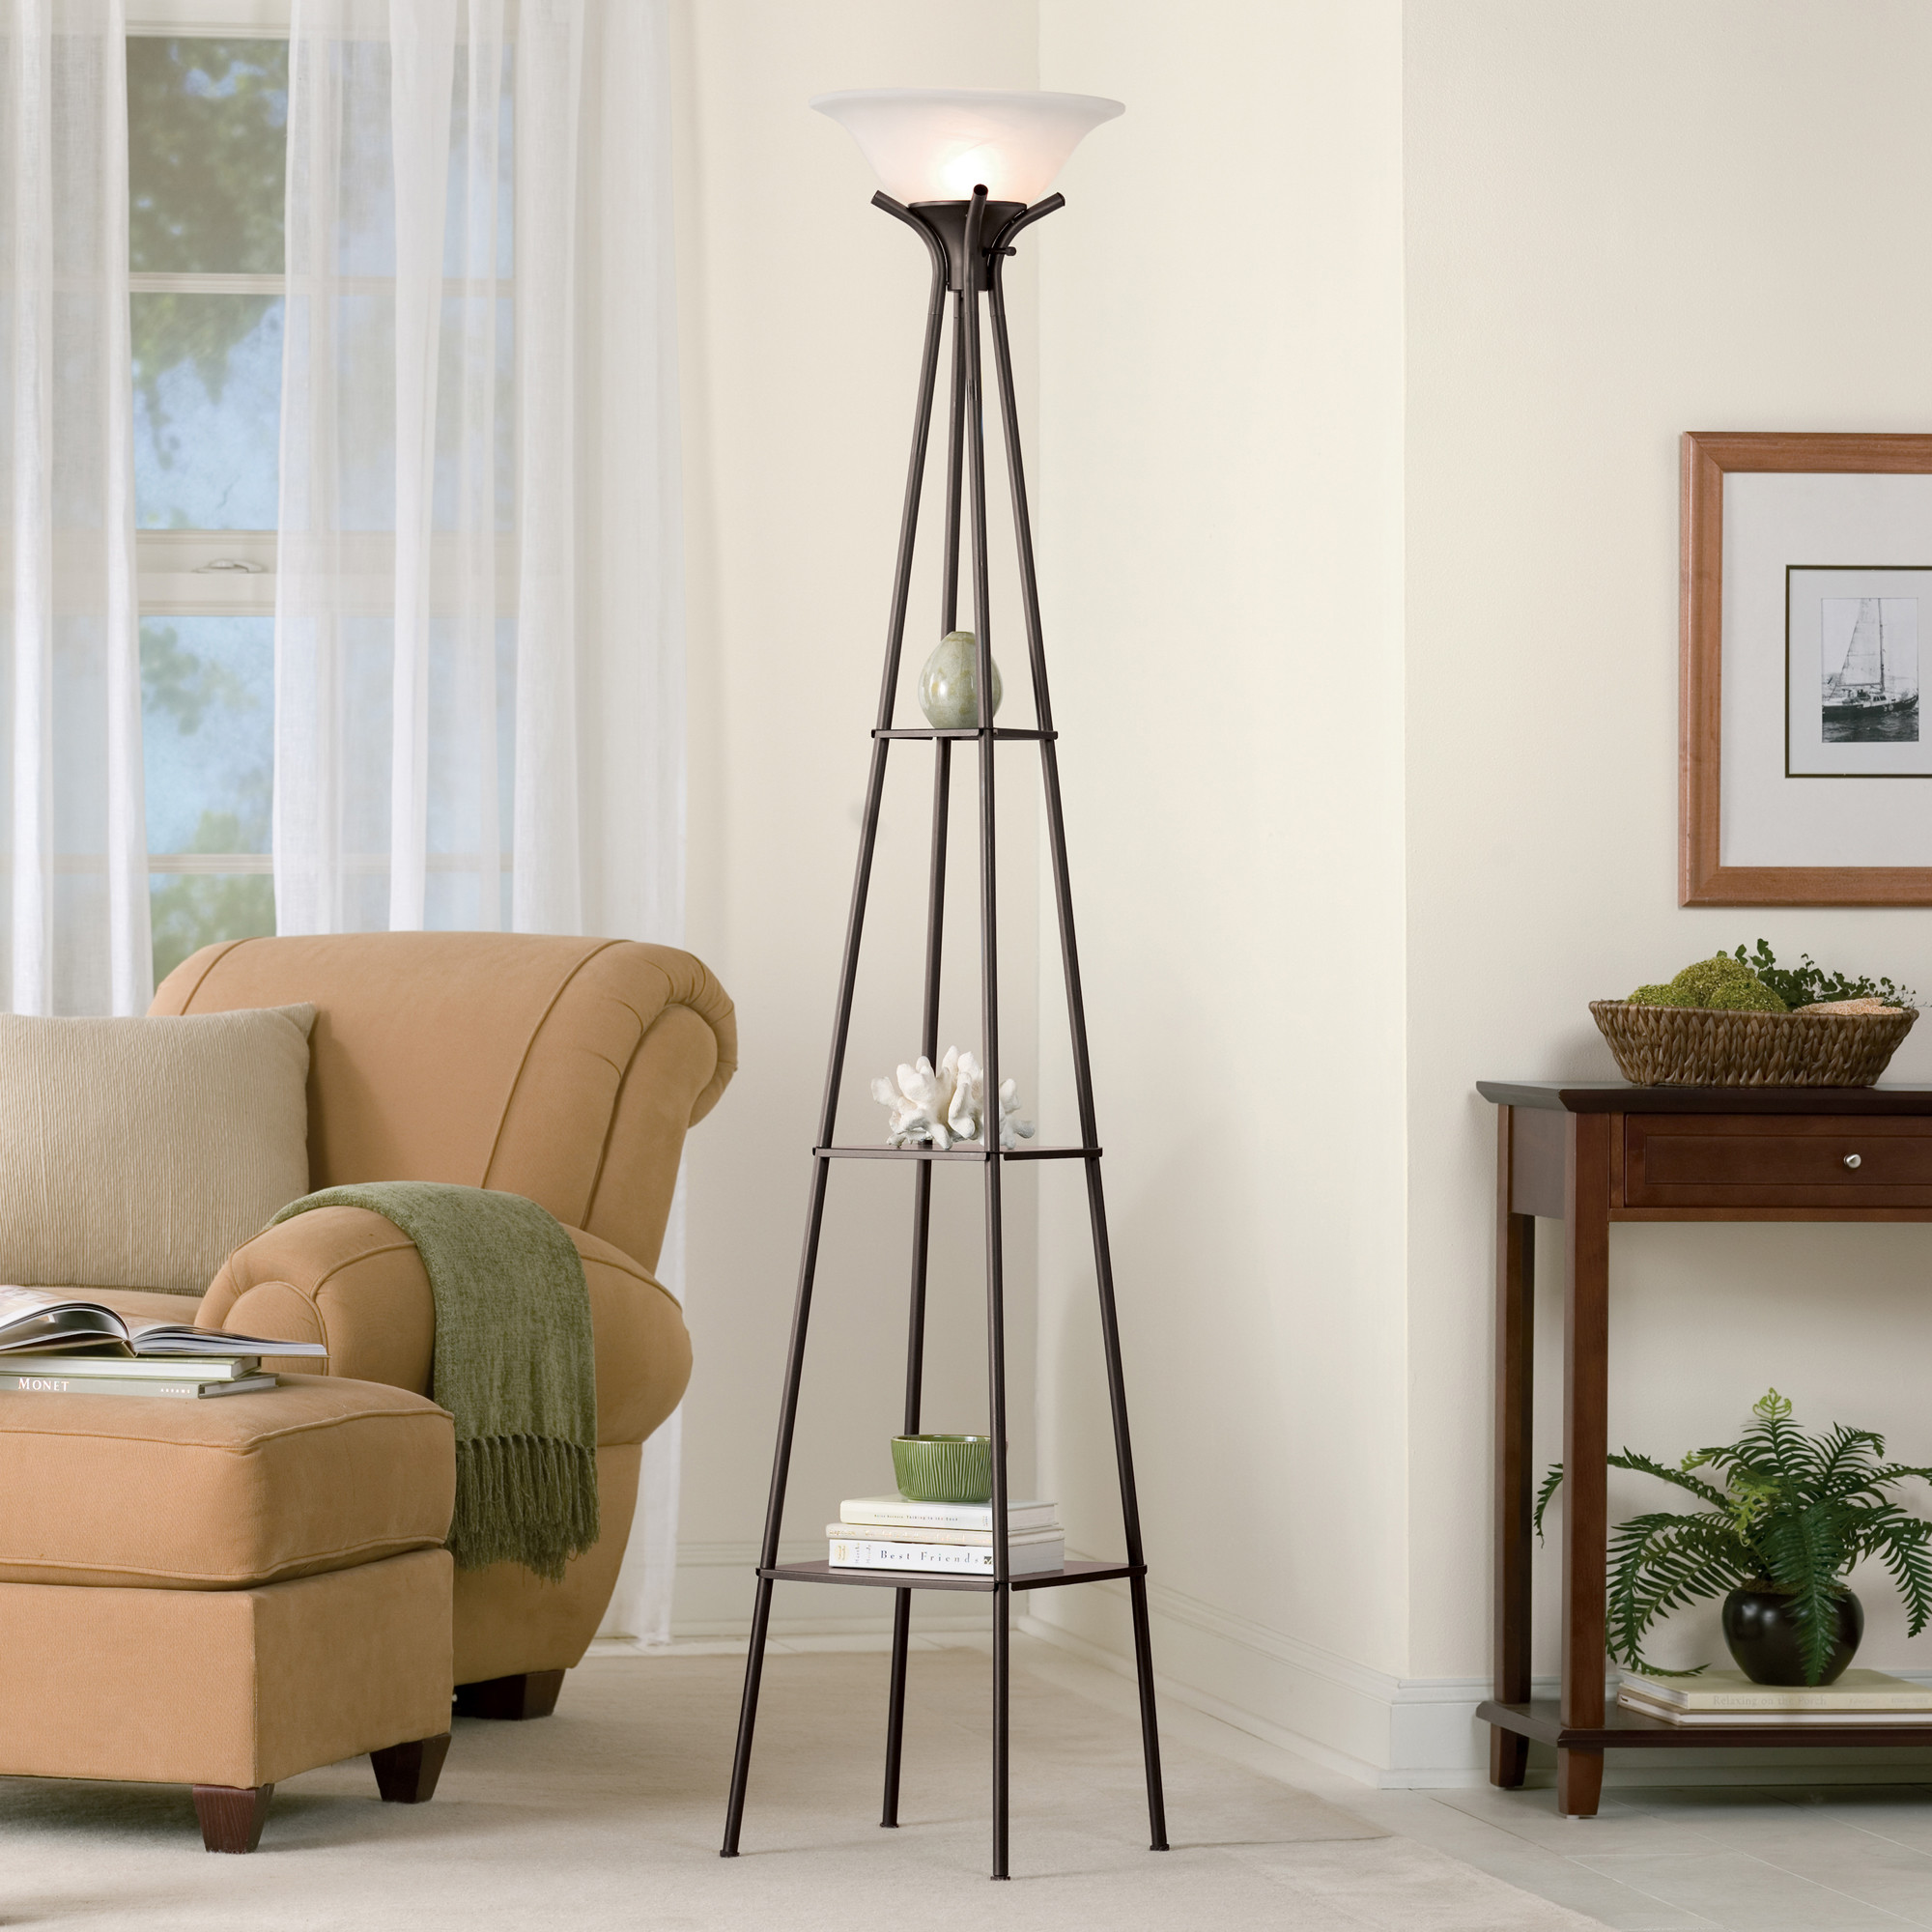 Tall Living Room Lamps
 Tall Modern Floor Lamp Charcoal Finish Shelf Light Living